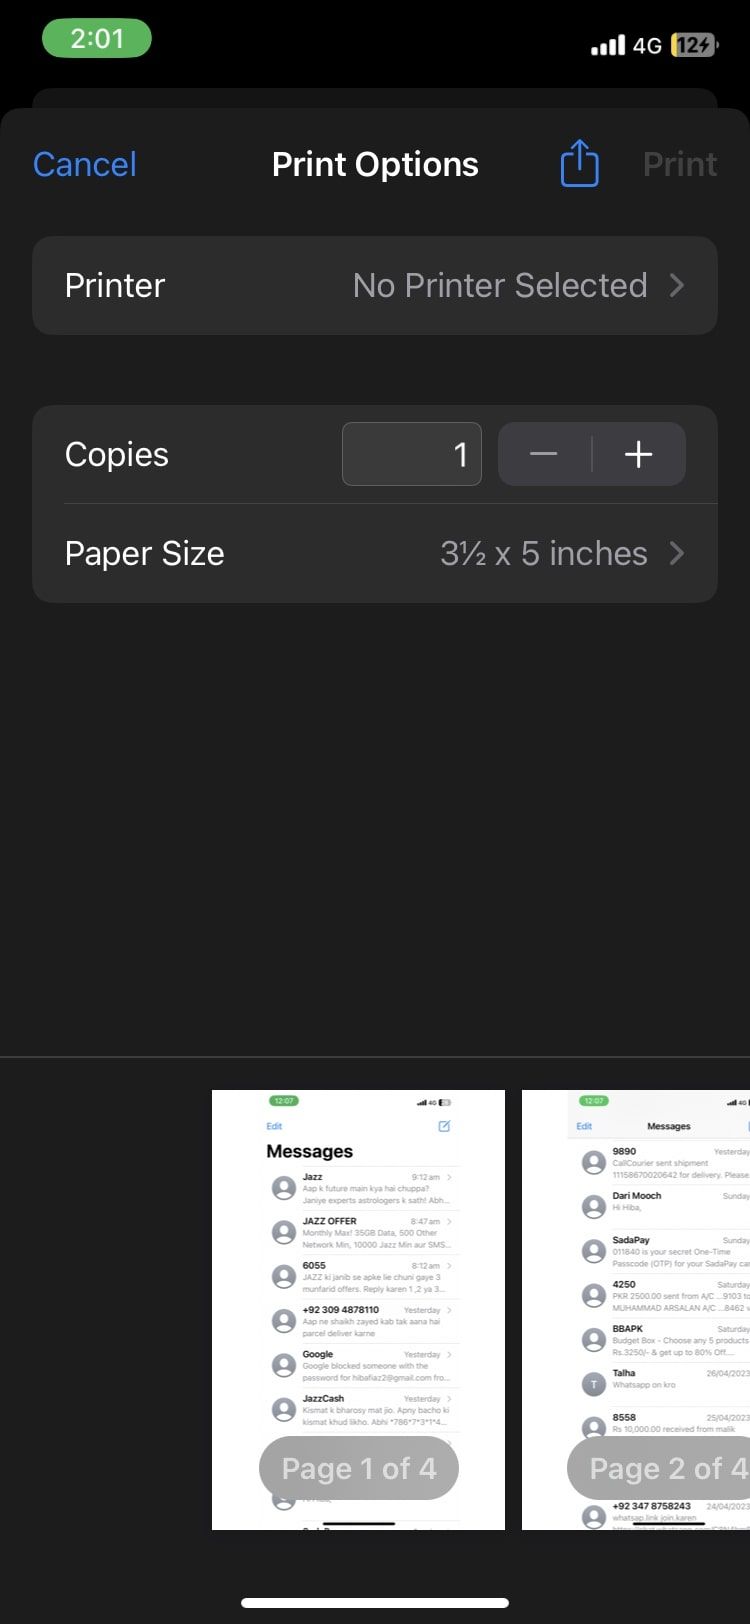 print options menu in iOS